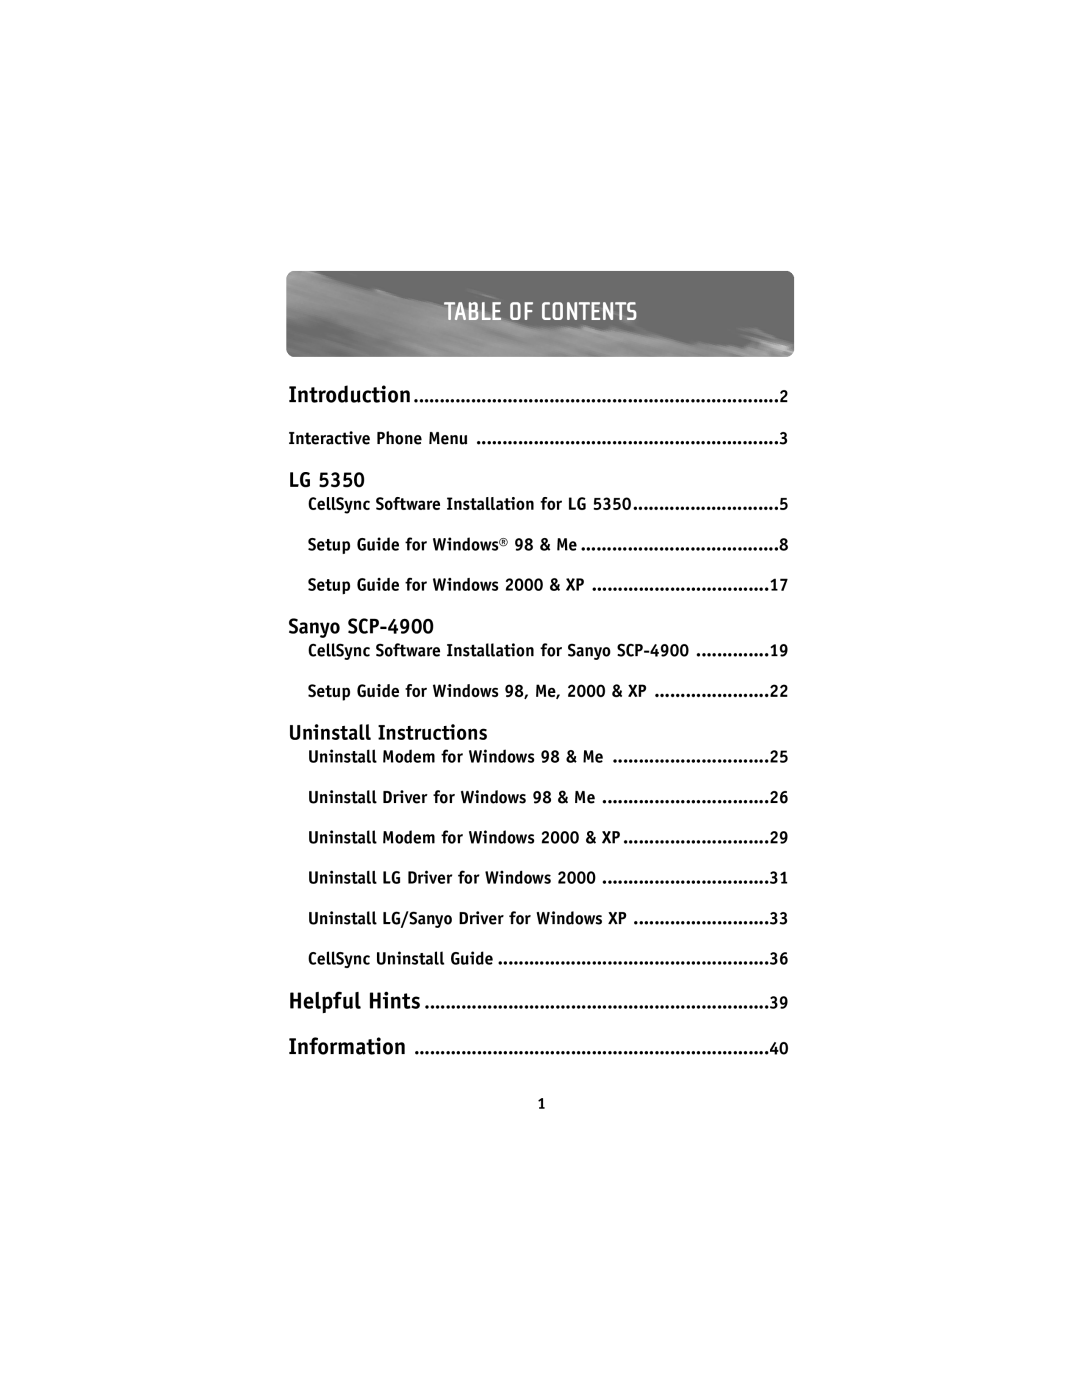 Belkin F8V7D008-SS, F8V7D006-SS user manual Table Of Contents, Information, Sanyo SCP-4900, Uninstall Instructions 